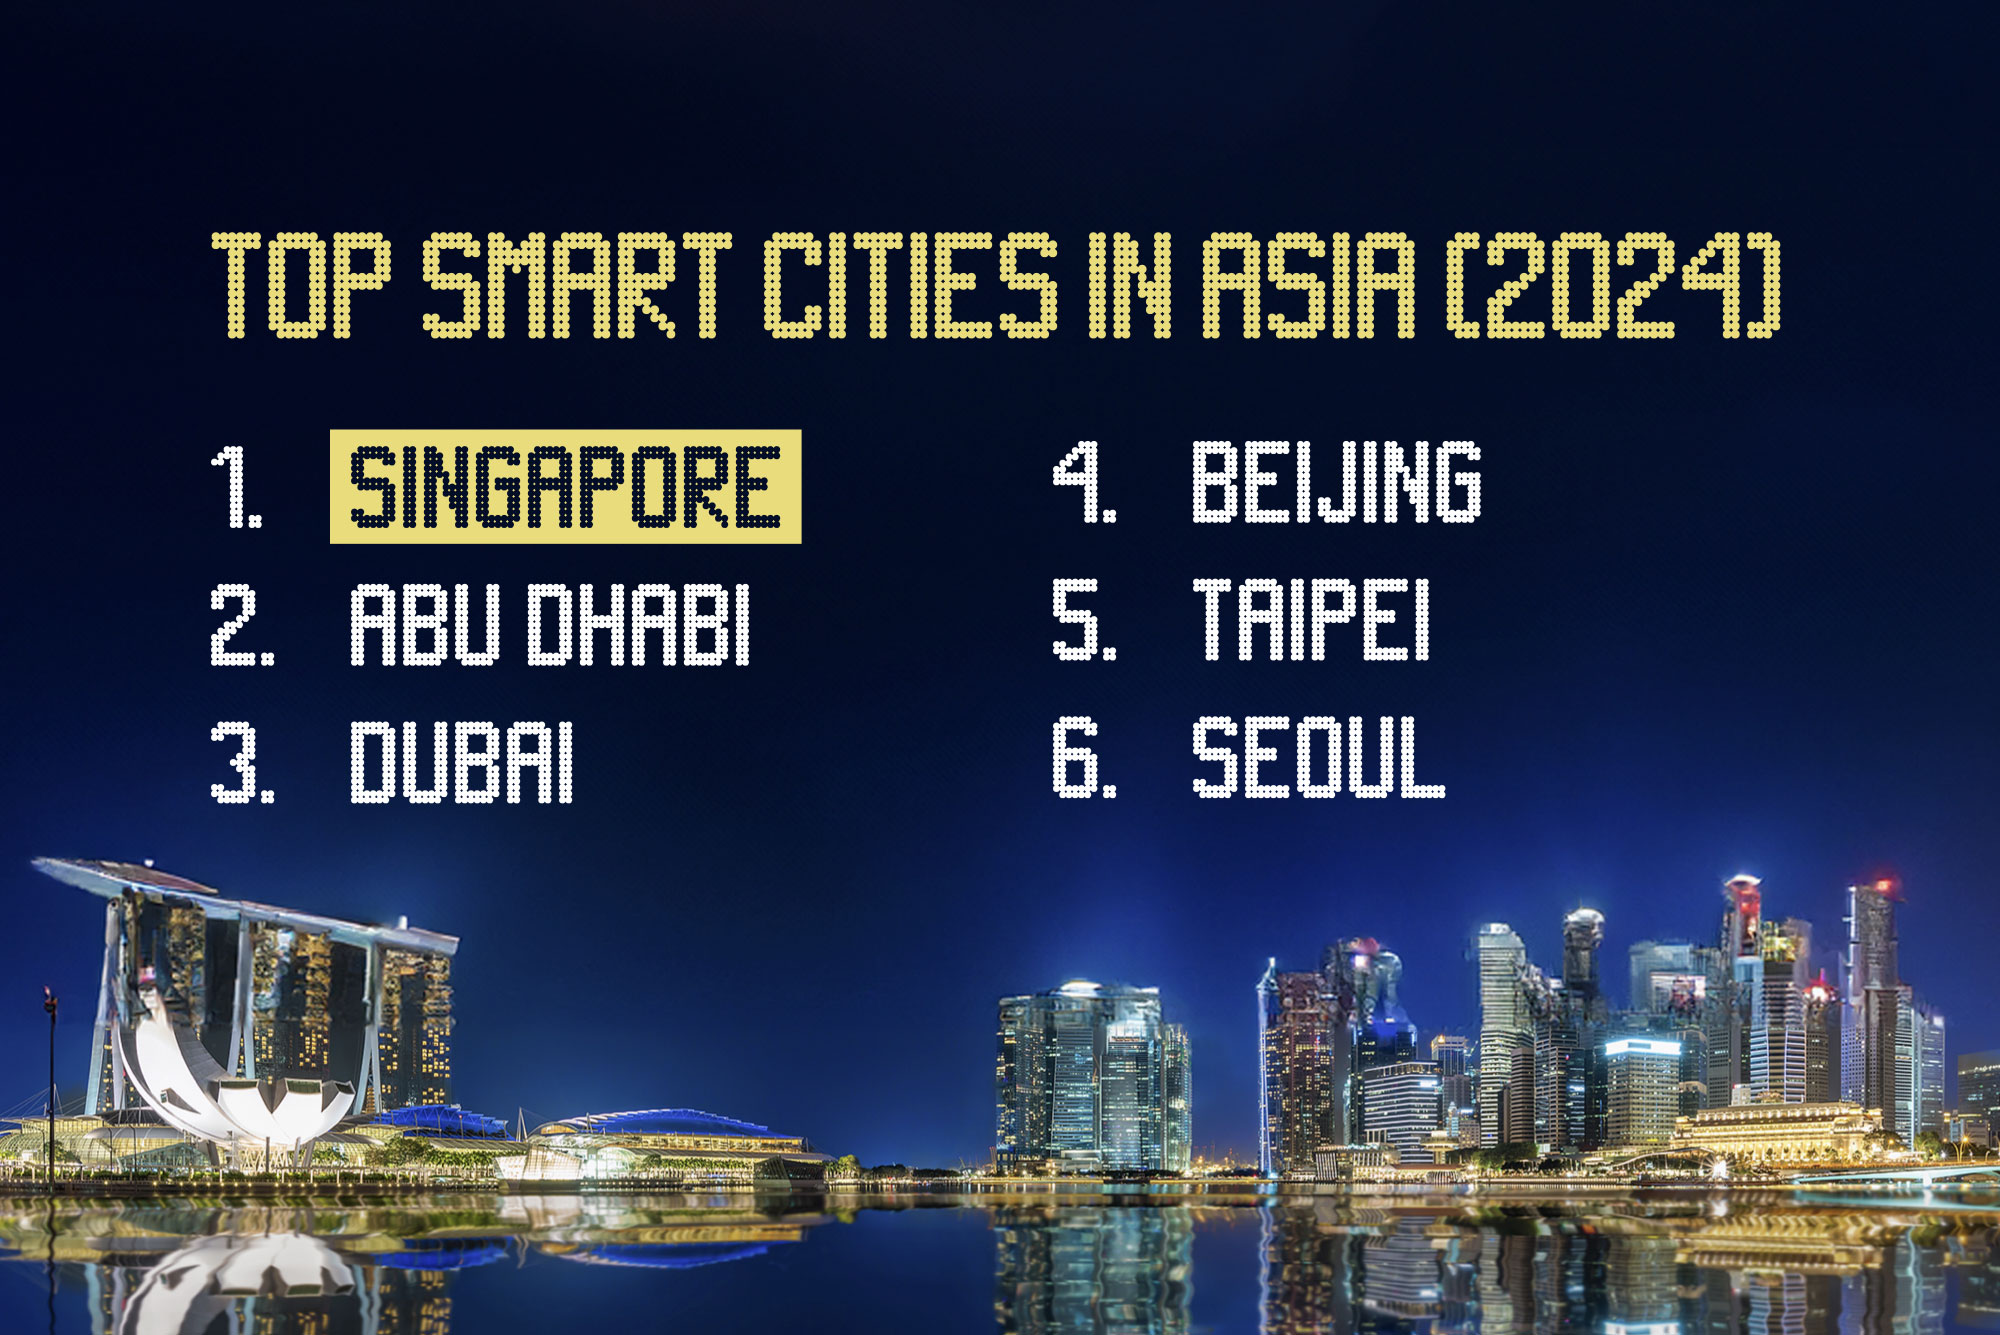 IMD-SUTD Smart City Index 2021